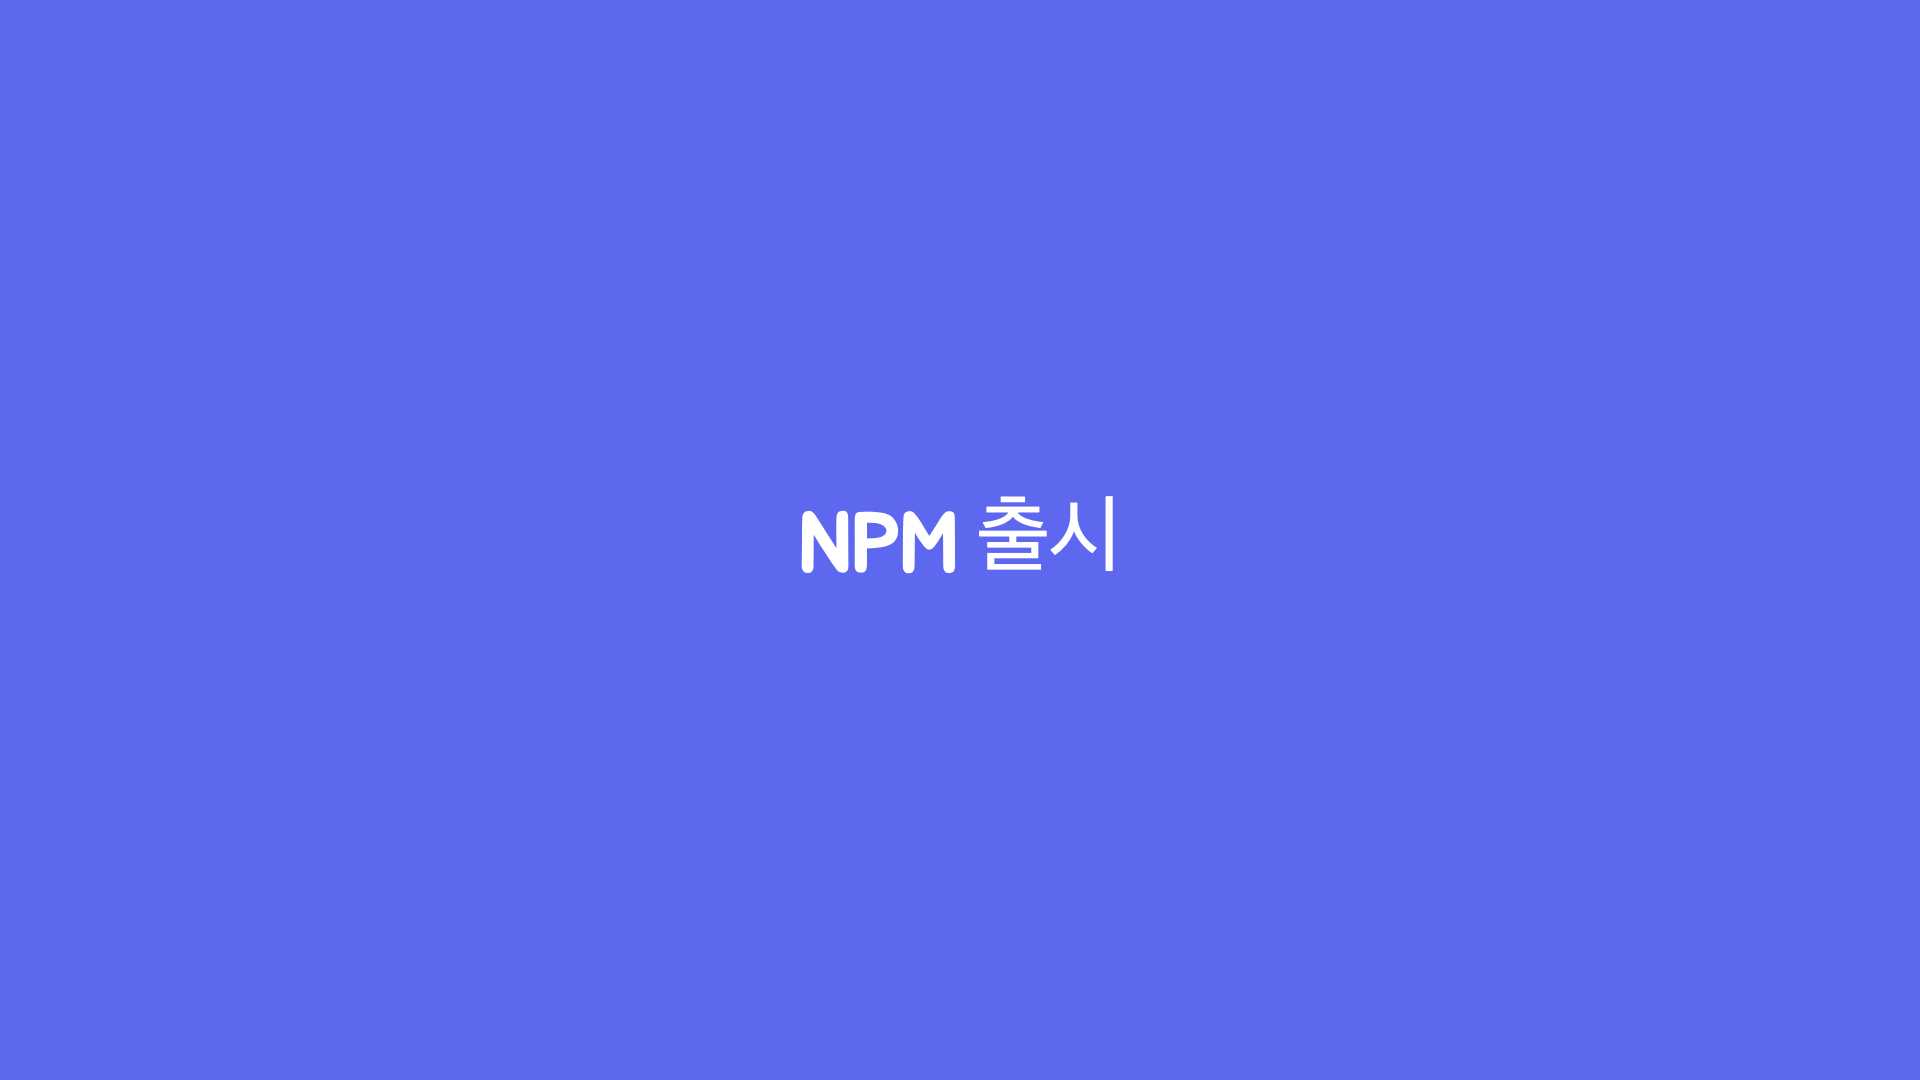 NPM 출시 히어로 이미지